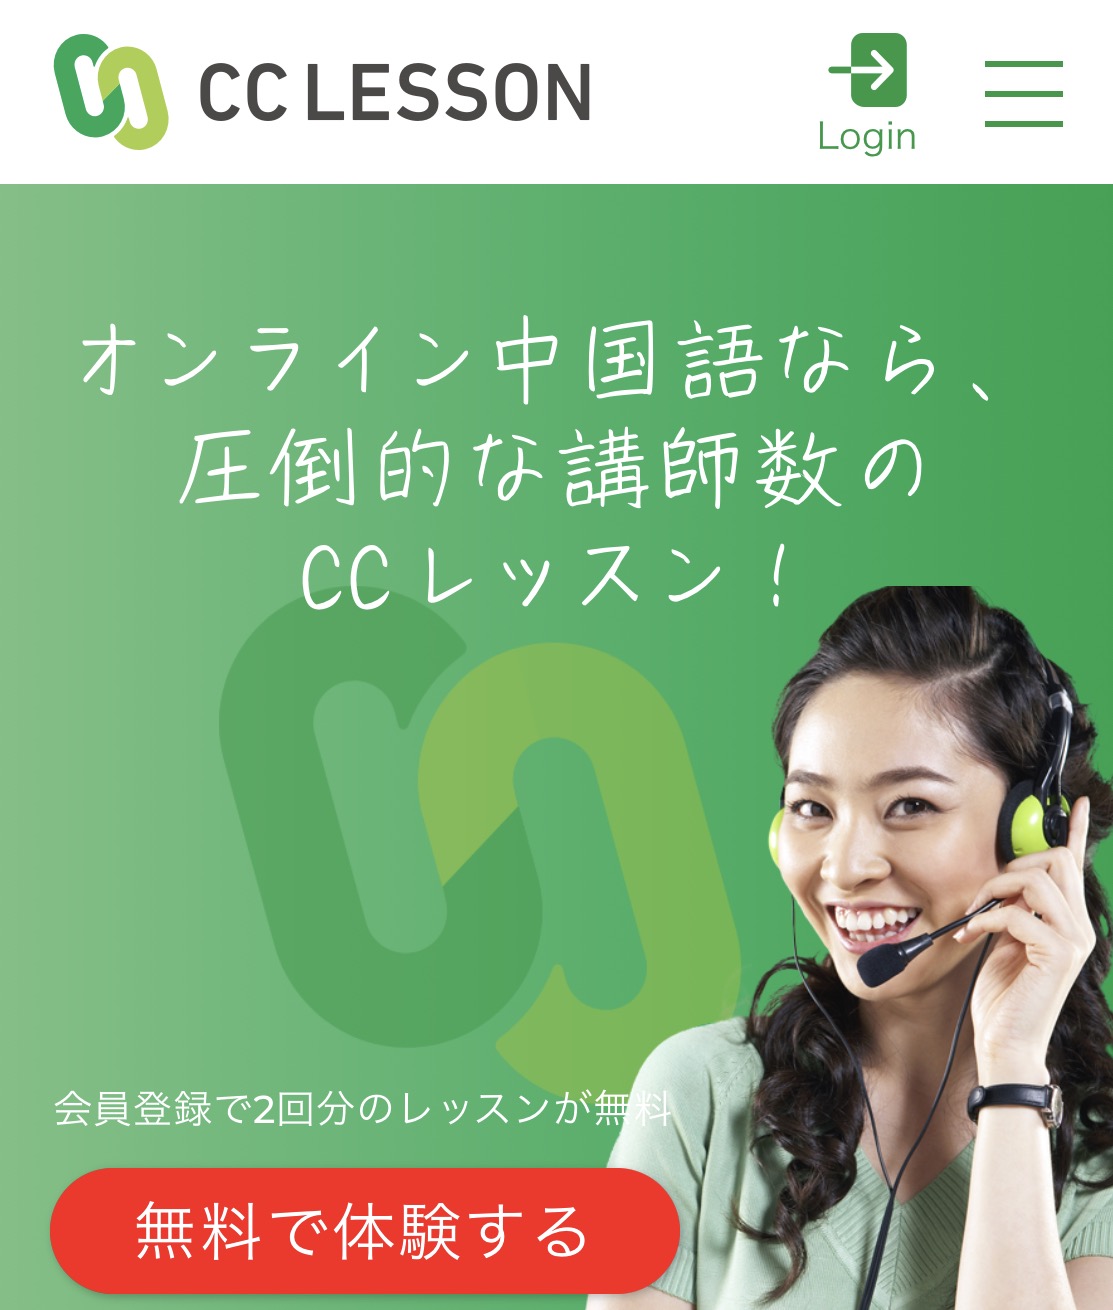 CC LESSON公式サイト